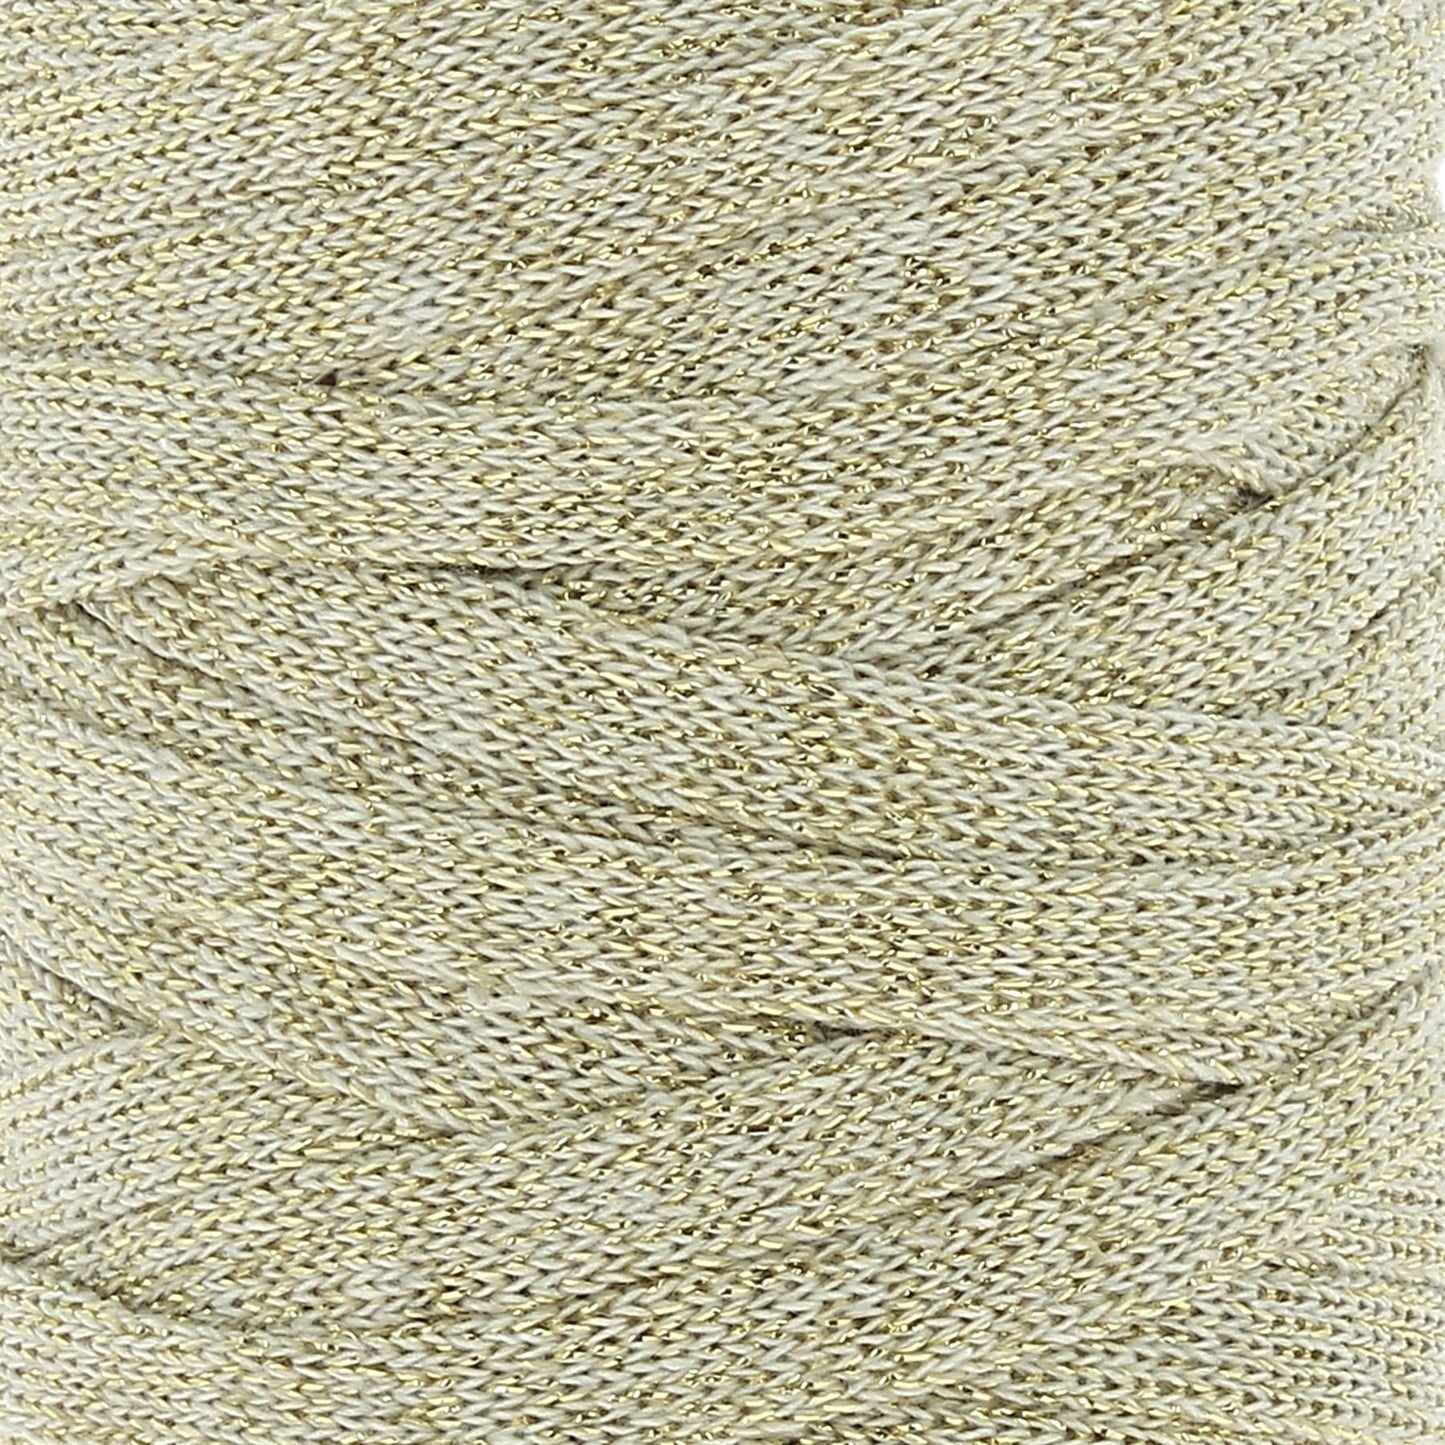 [Hoooked] RXLLUREX 2MINI RibbonXL Lurex Golden Dust Cotton Yarn - 28M, 80g